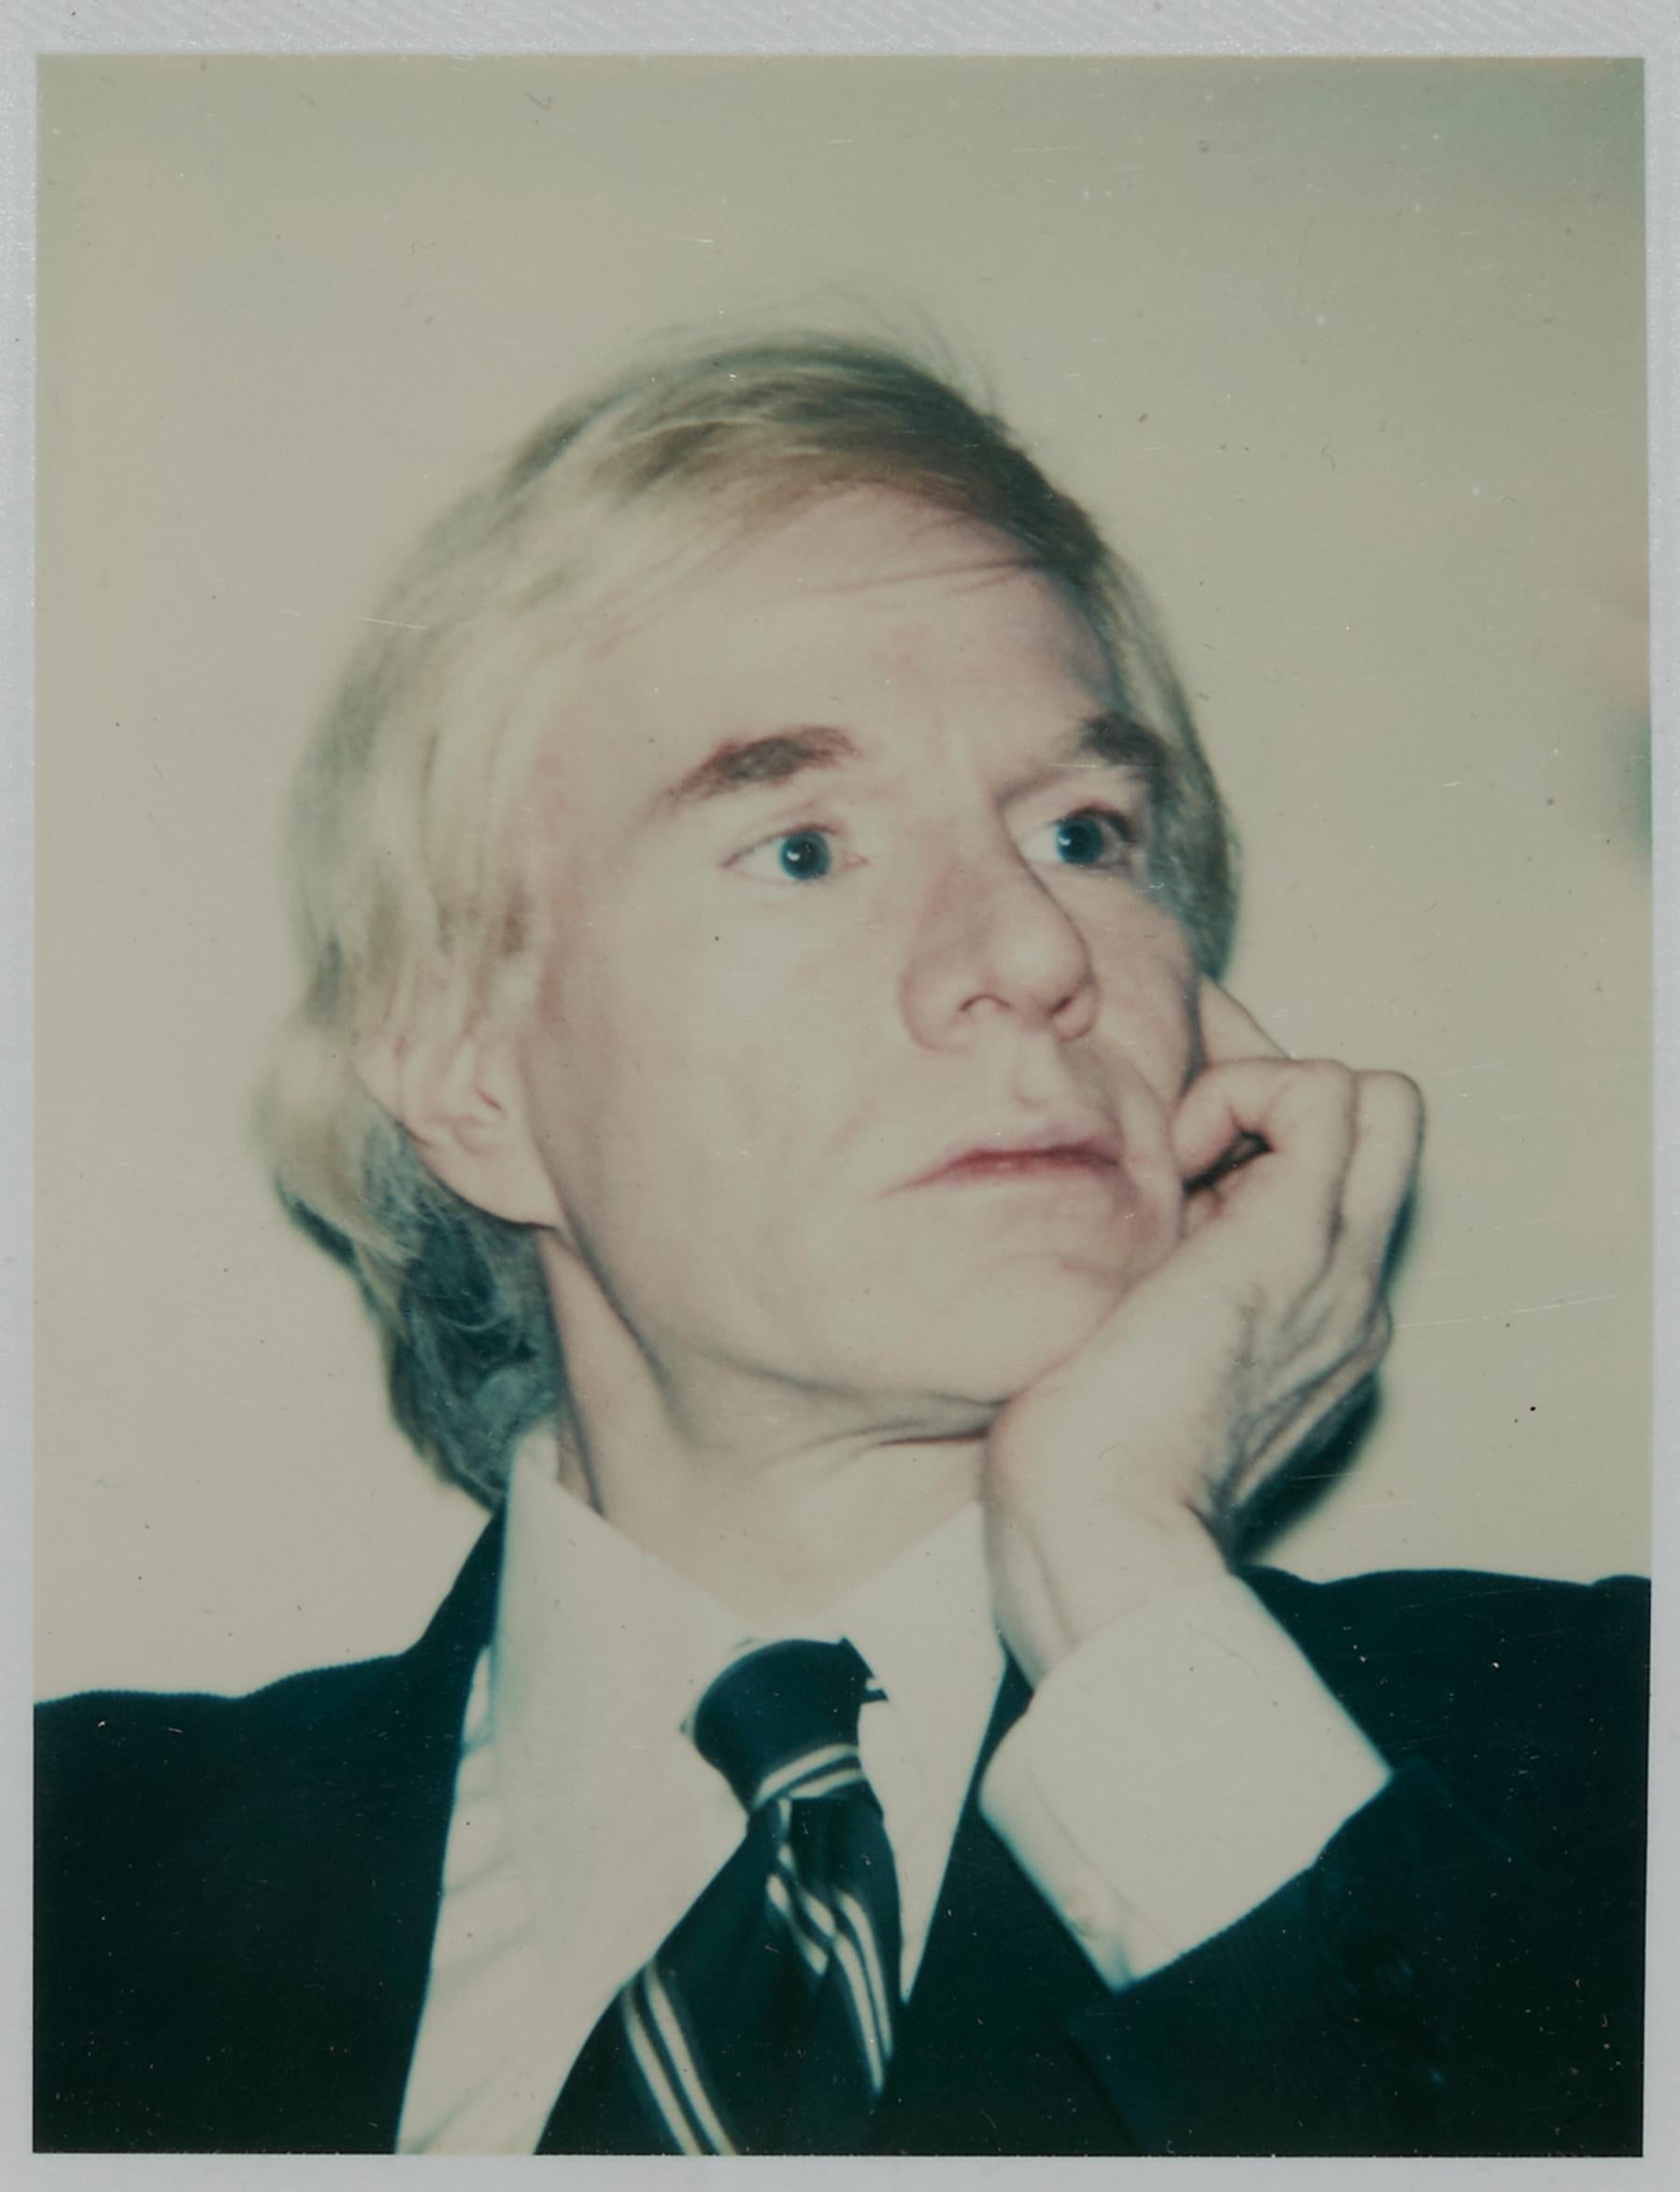 Self-Portrait en polaroïd couleur d'Andy Warhol